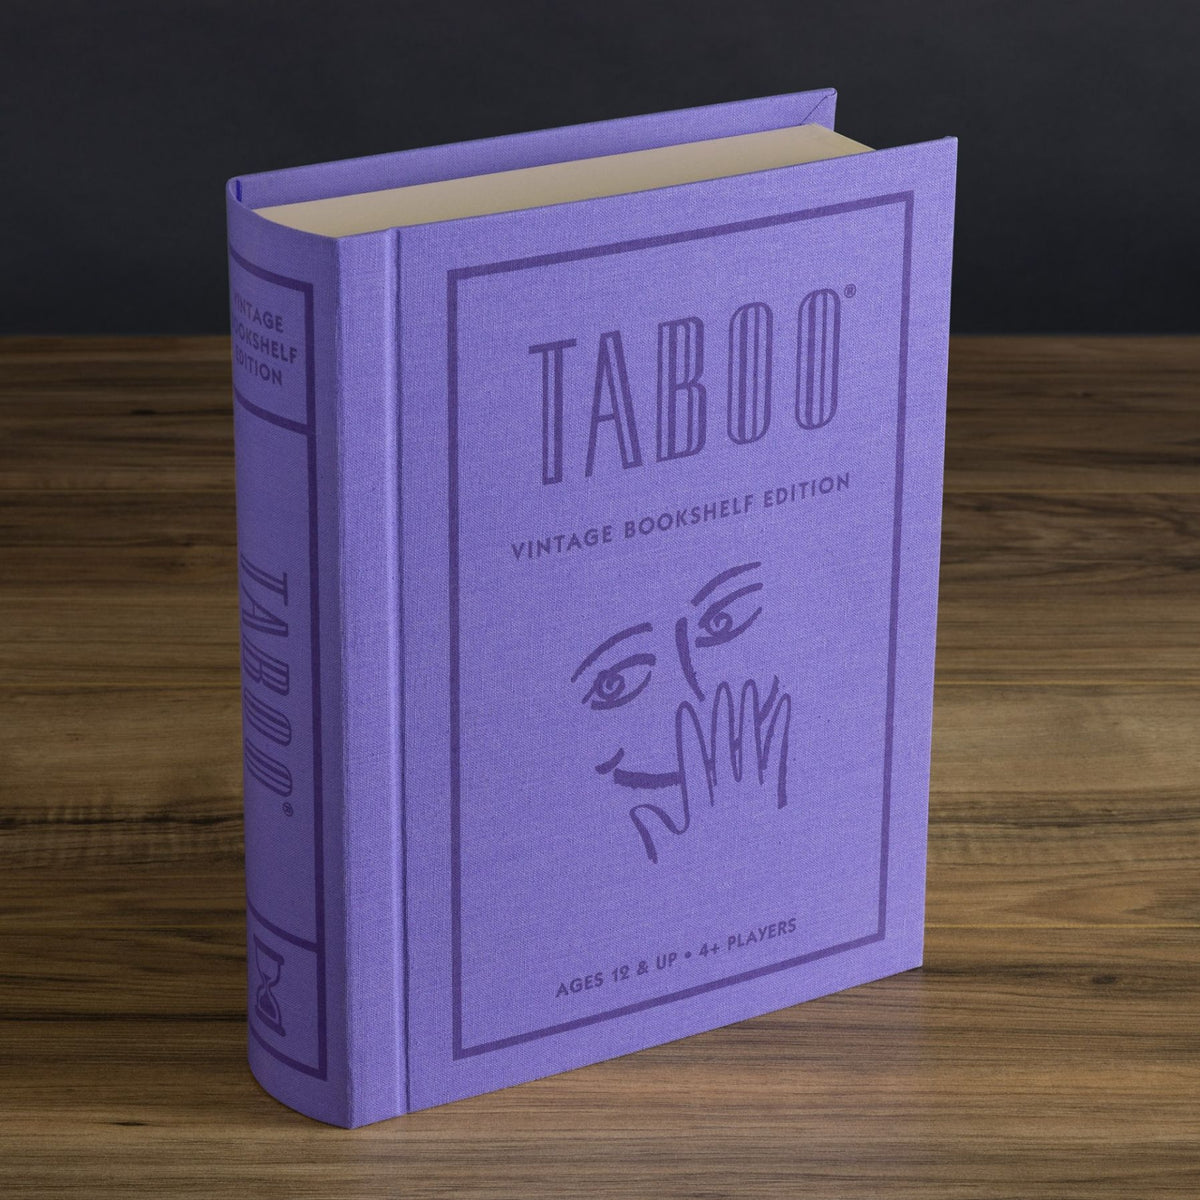 Vintage Bookshelf Edition | Taboo | WS Game Company